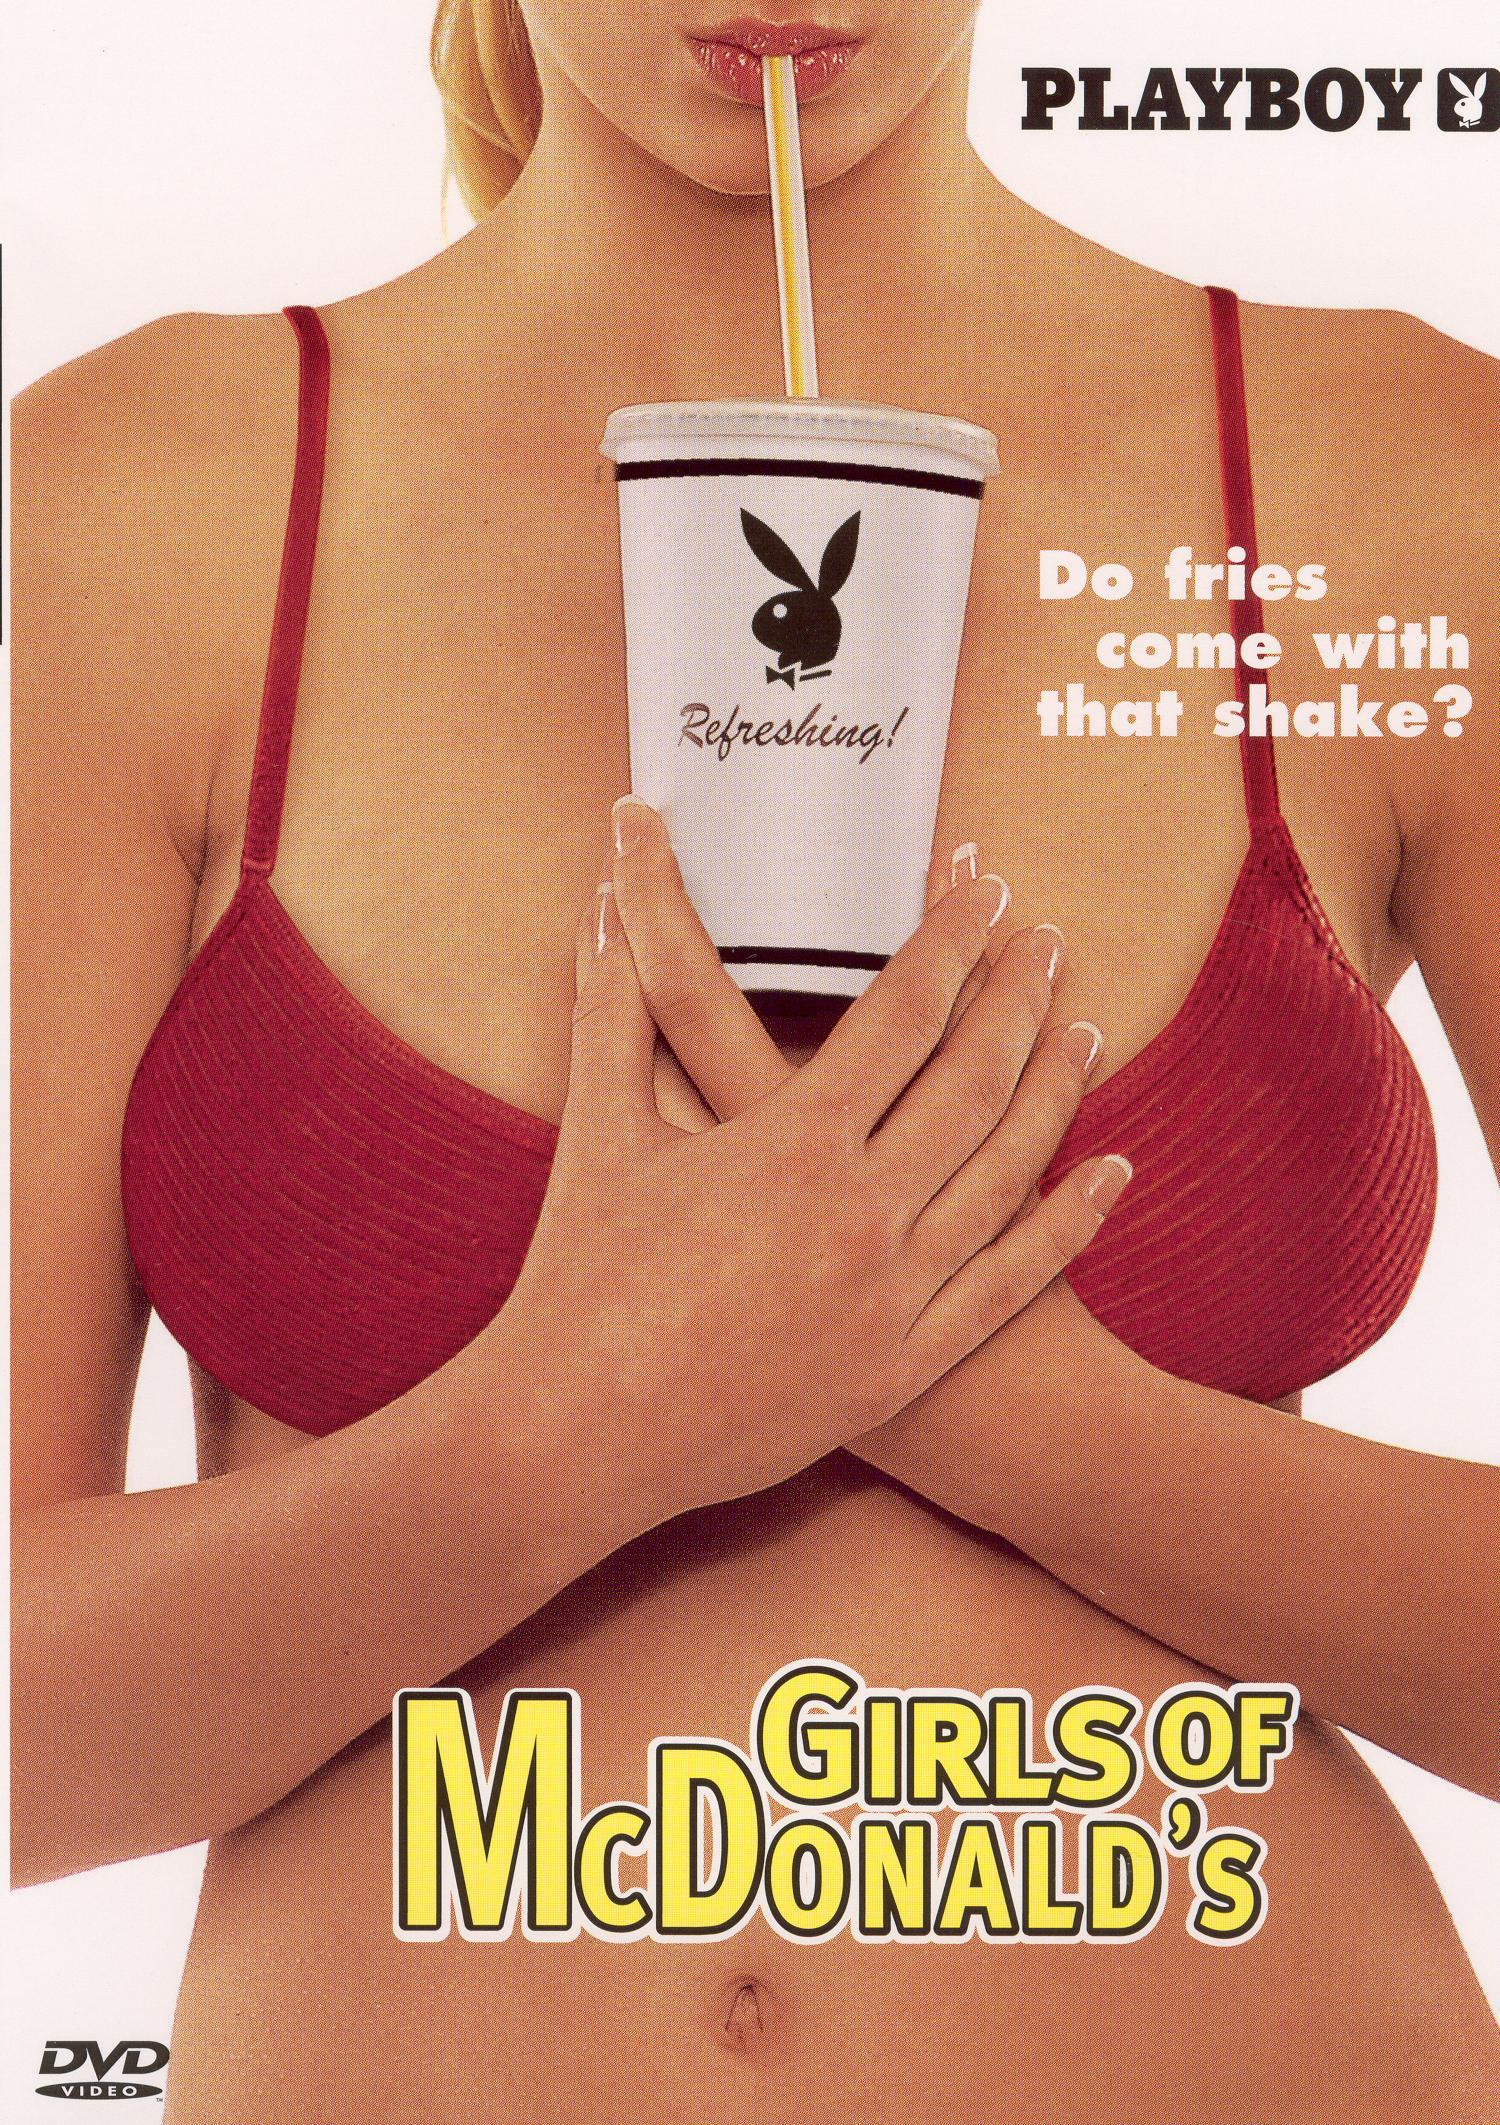 Playboy girls of mcdonalds